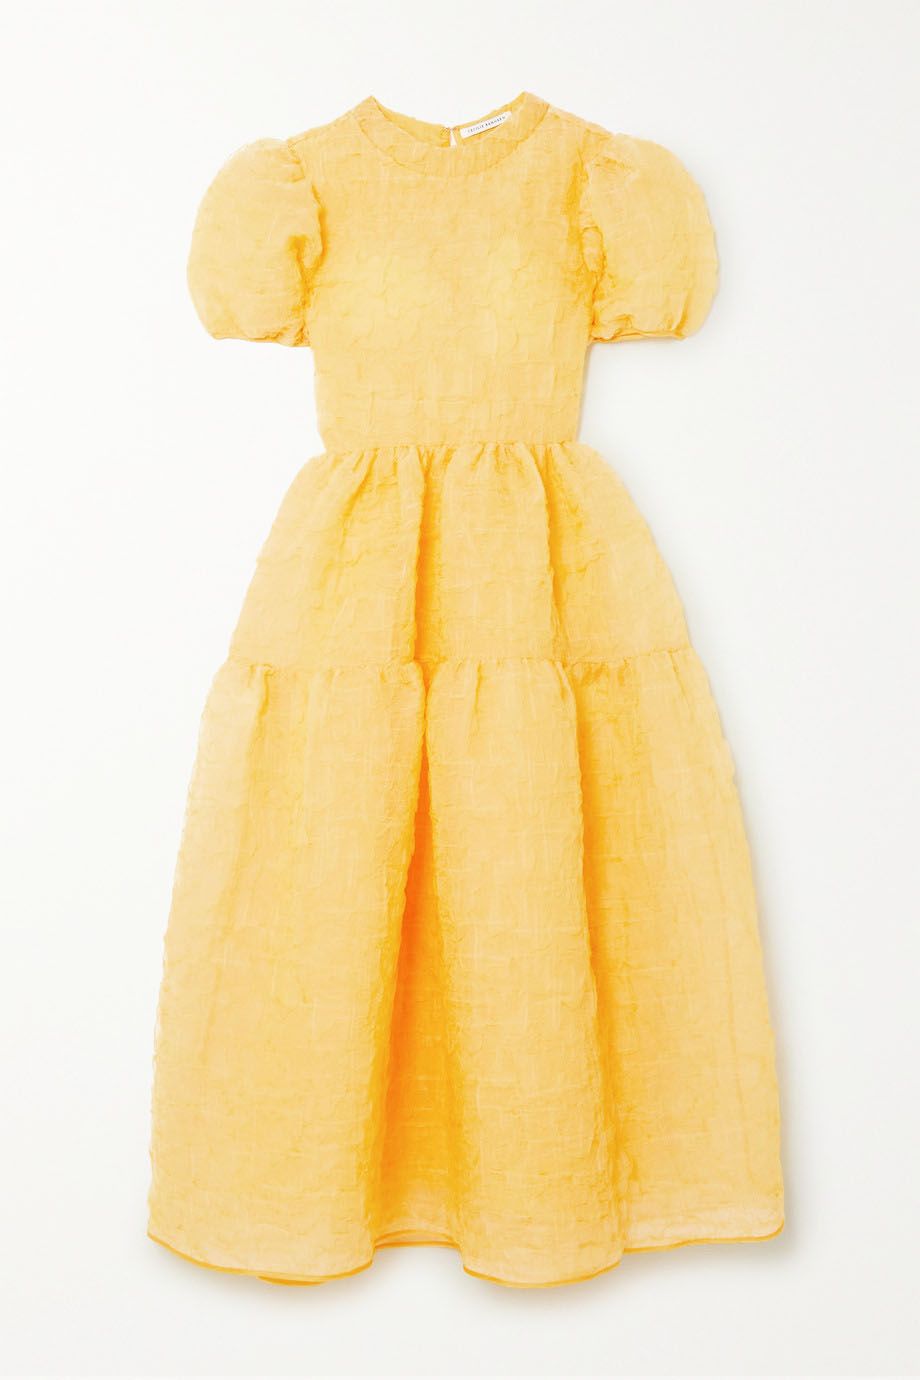 zara yellow dress maxi